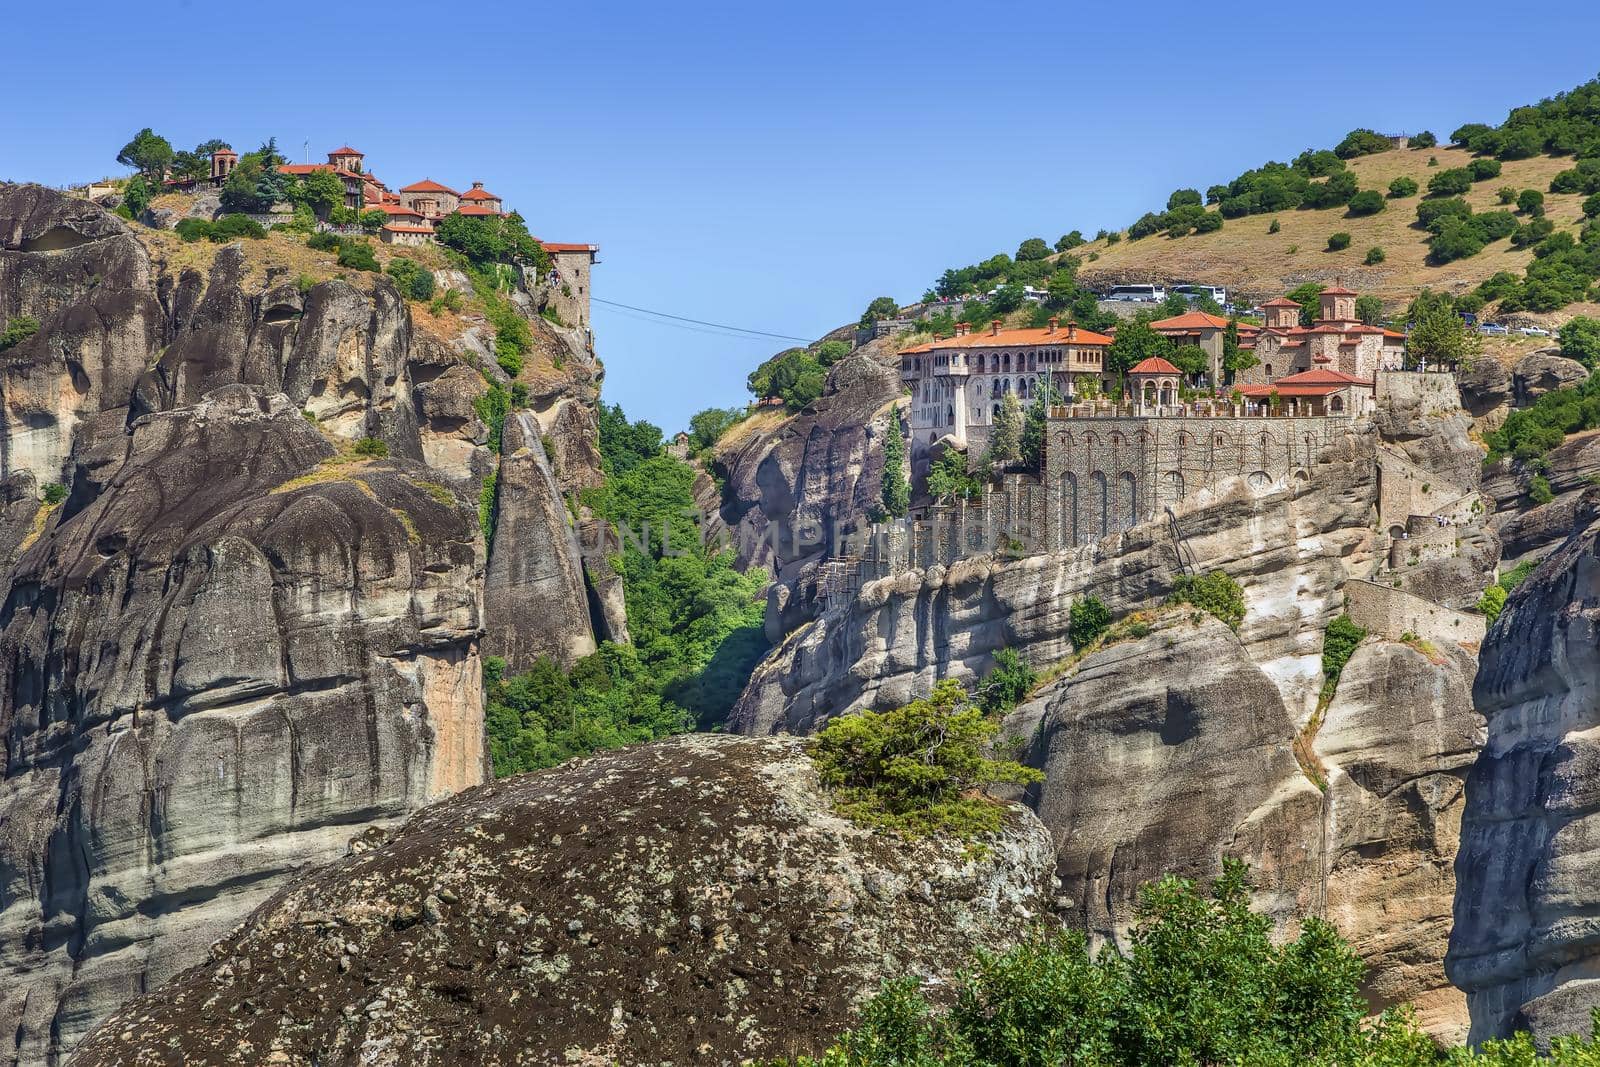 View of Monastery of Varlaam and Great Meteoron on rocks in Meteora, Greece